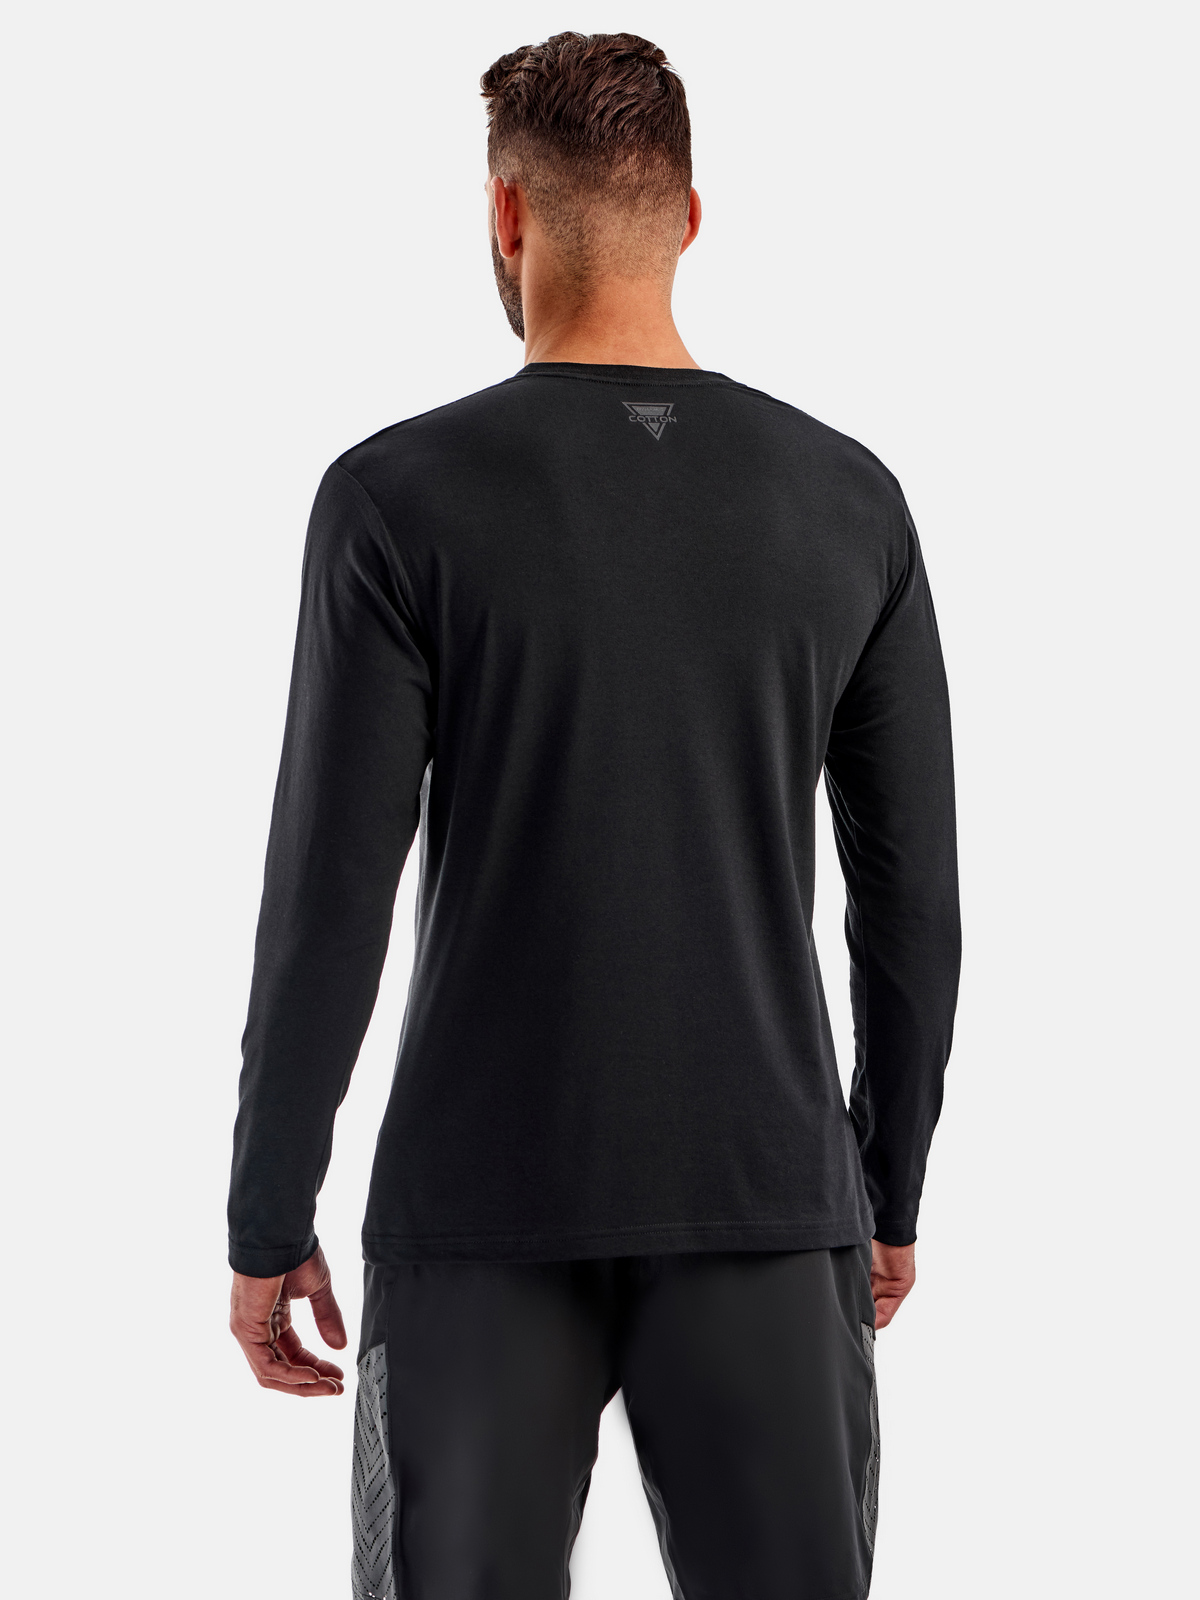 Peresvit Dynamic Cotton Long Sleeve T-shirt Phantom Black, Photo No. 2